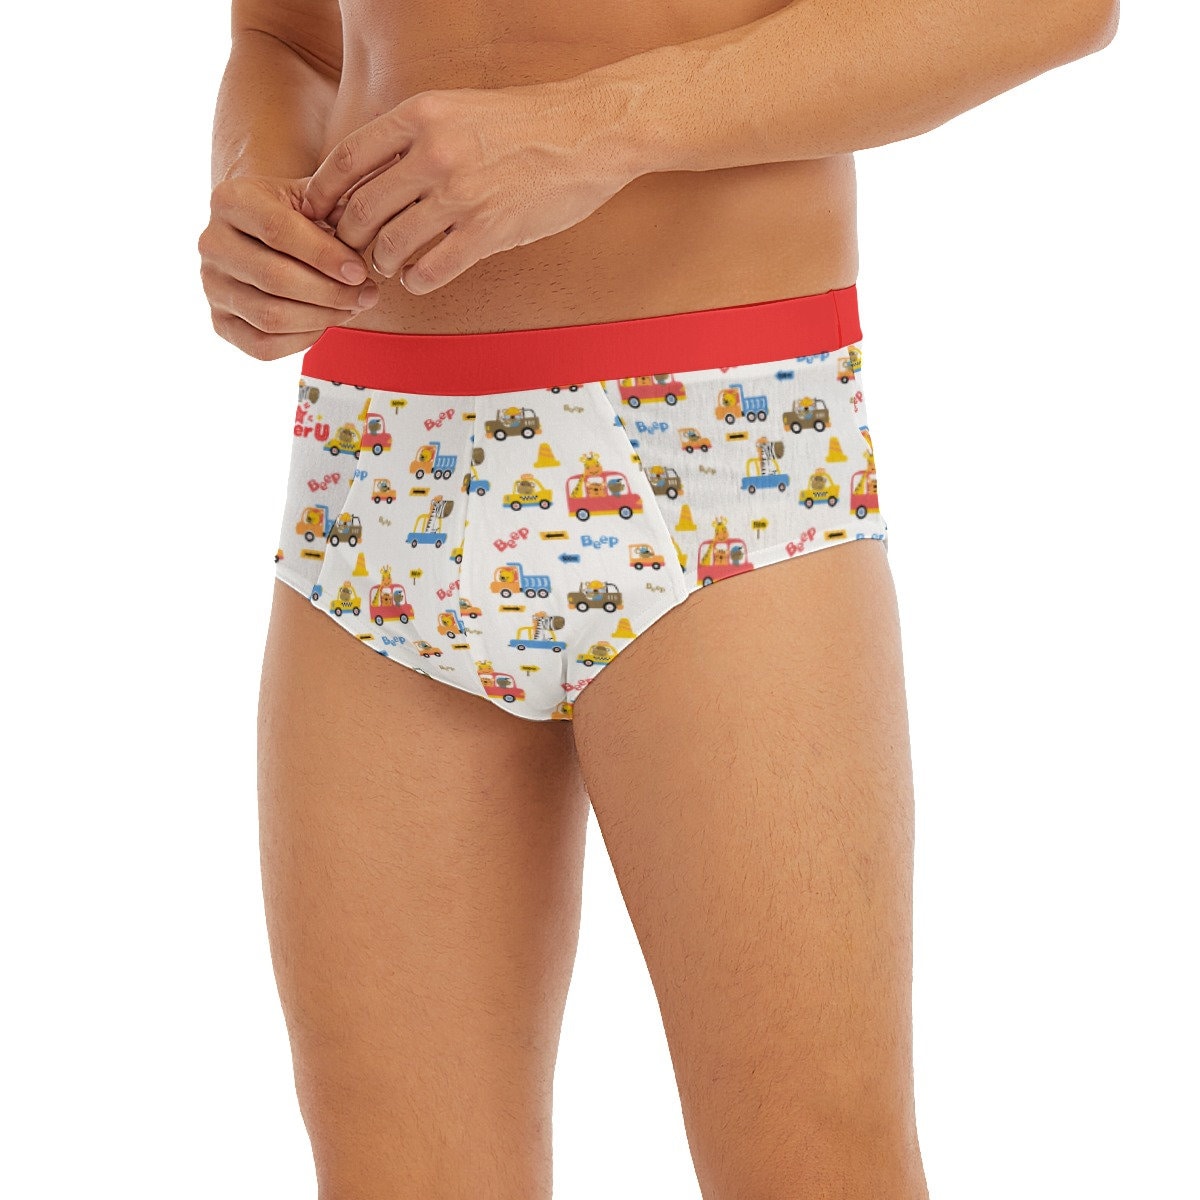 BIG TOTS ABDL Boy Briefs Underwear Baby Things Adult Baby 